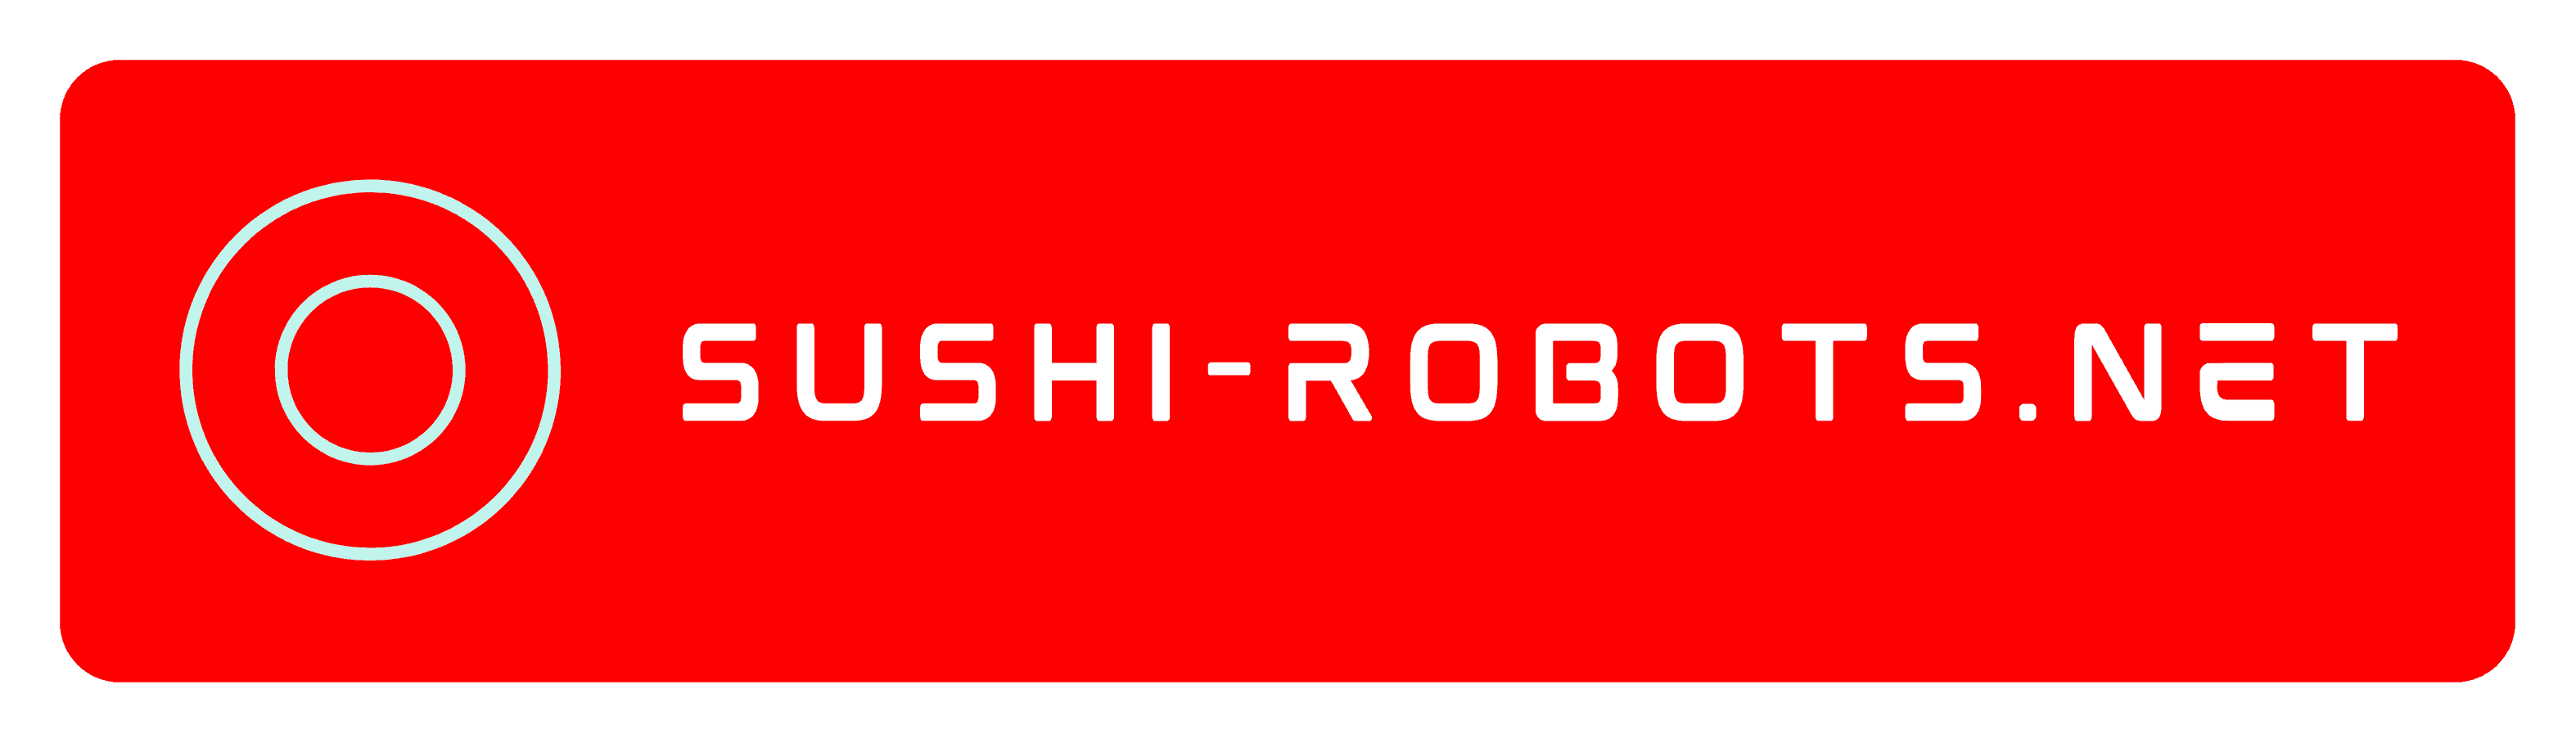 https://sushi-robots.net/wp-content/uploads/2021/05/Color-logo-no-background.png